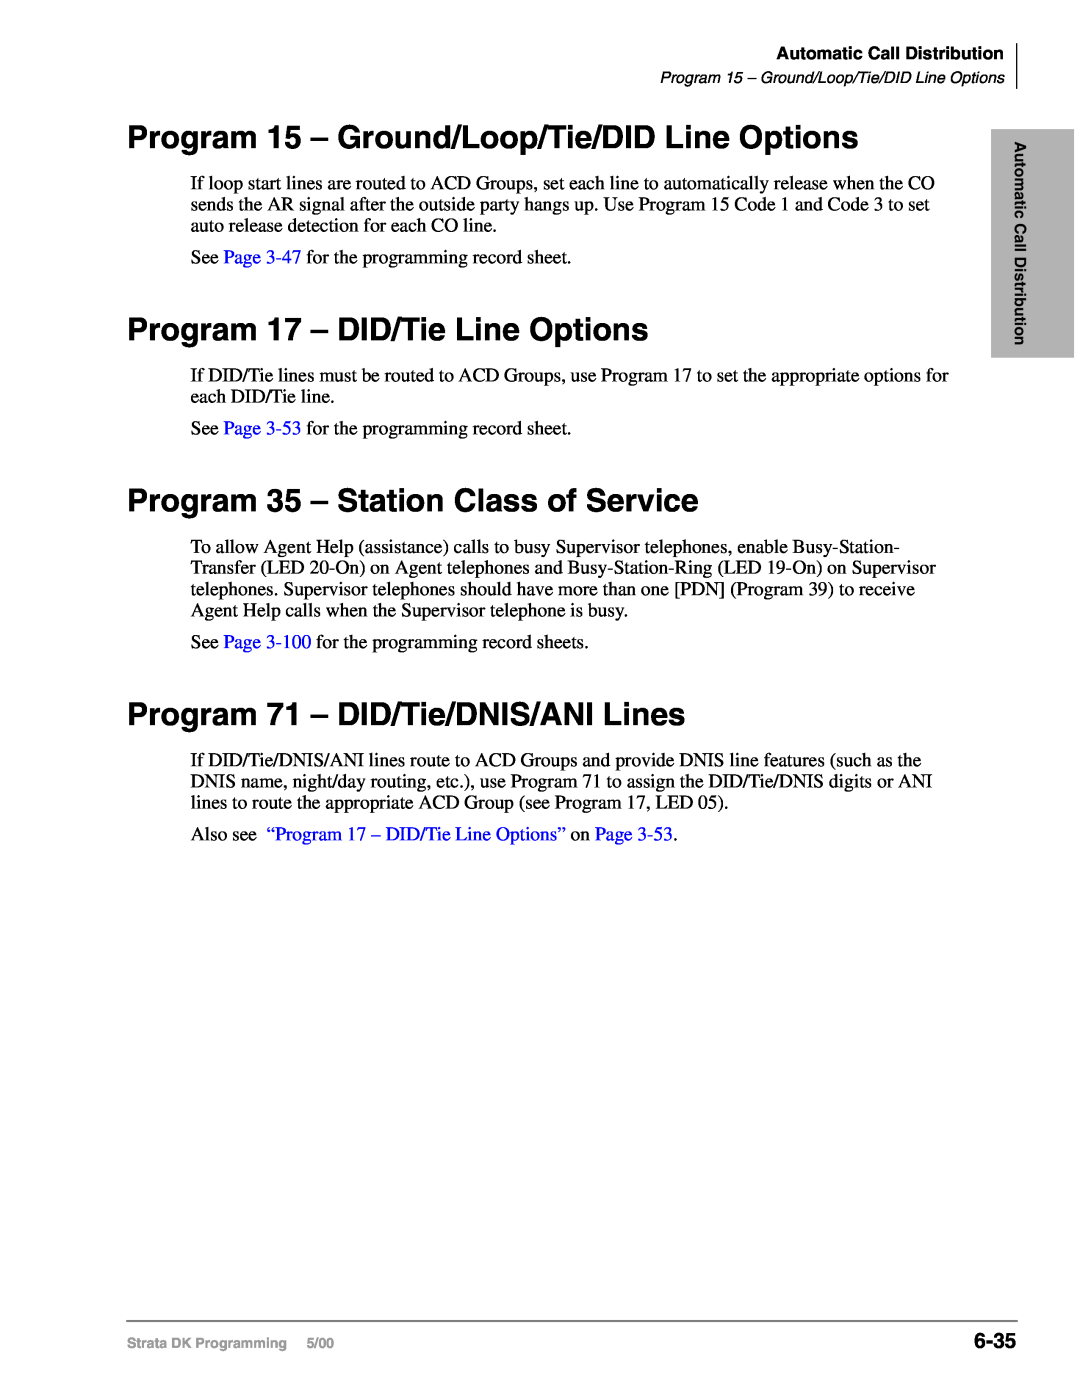 Toshiba dk14, DK40I, DK424I Program 71 – DID/Tie/DNIS/ANI Lines, 6-35, Program 15 – Ground/Loop/Tie/DID Line Options 